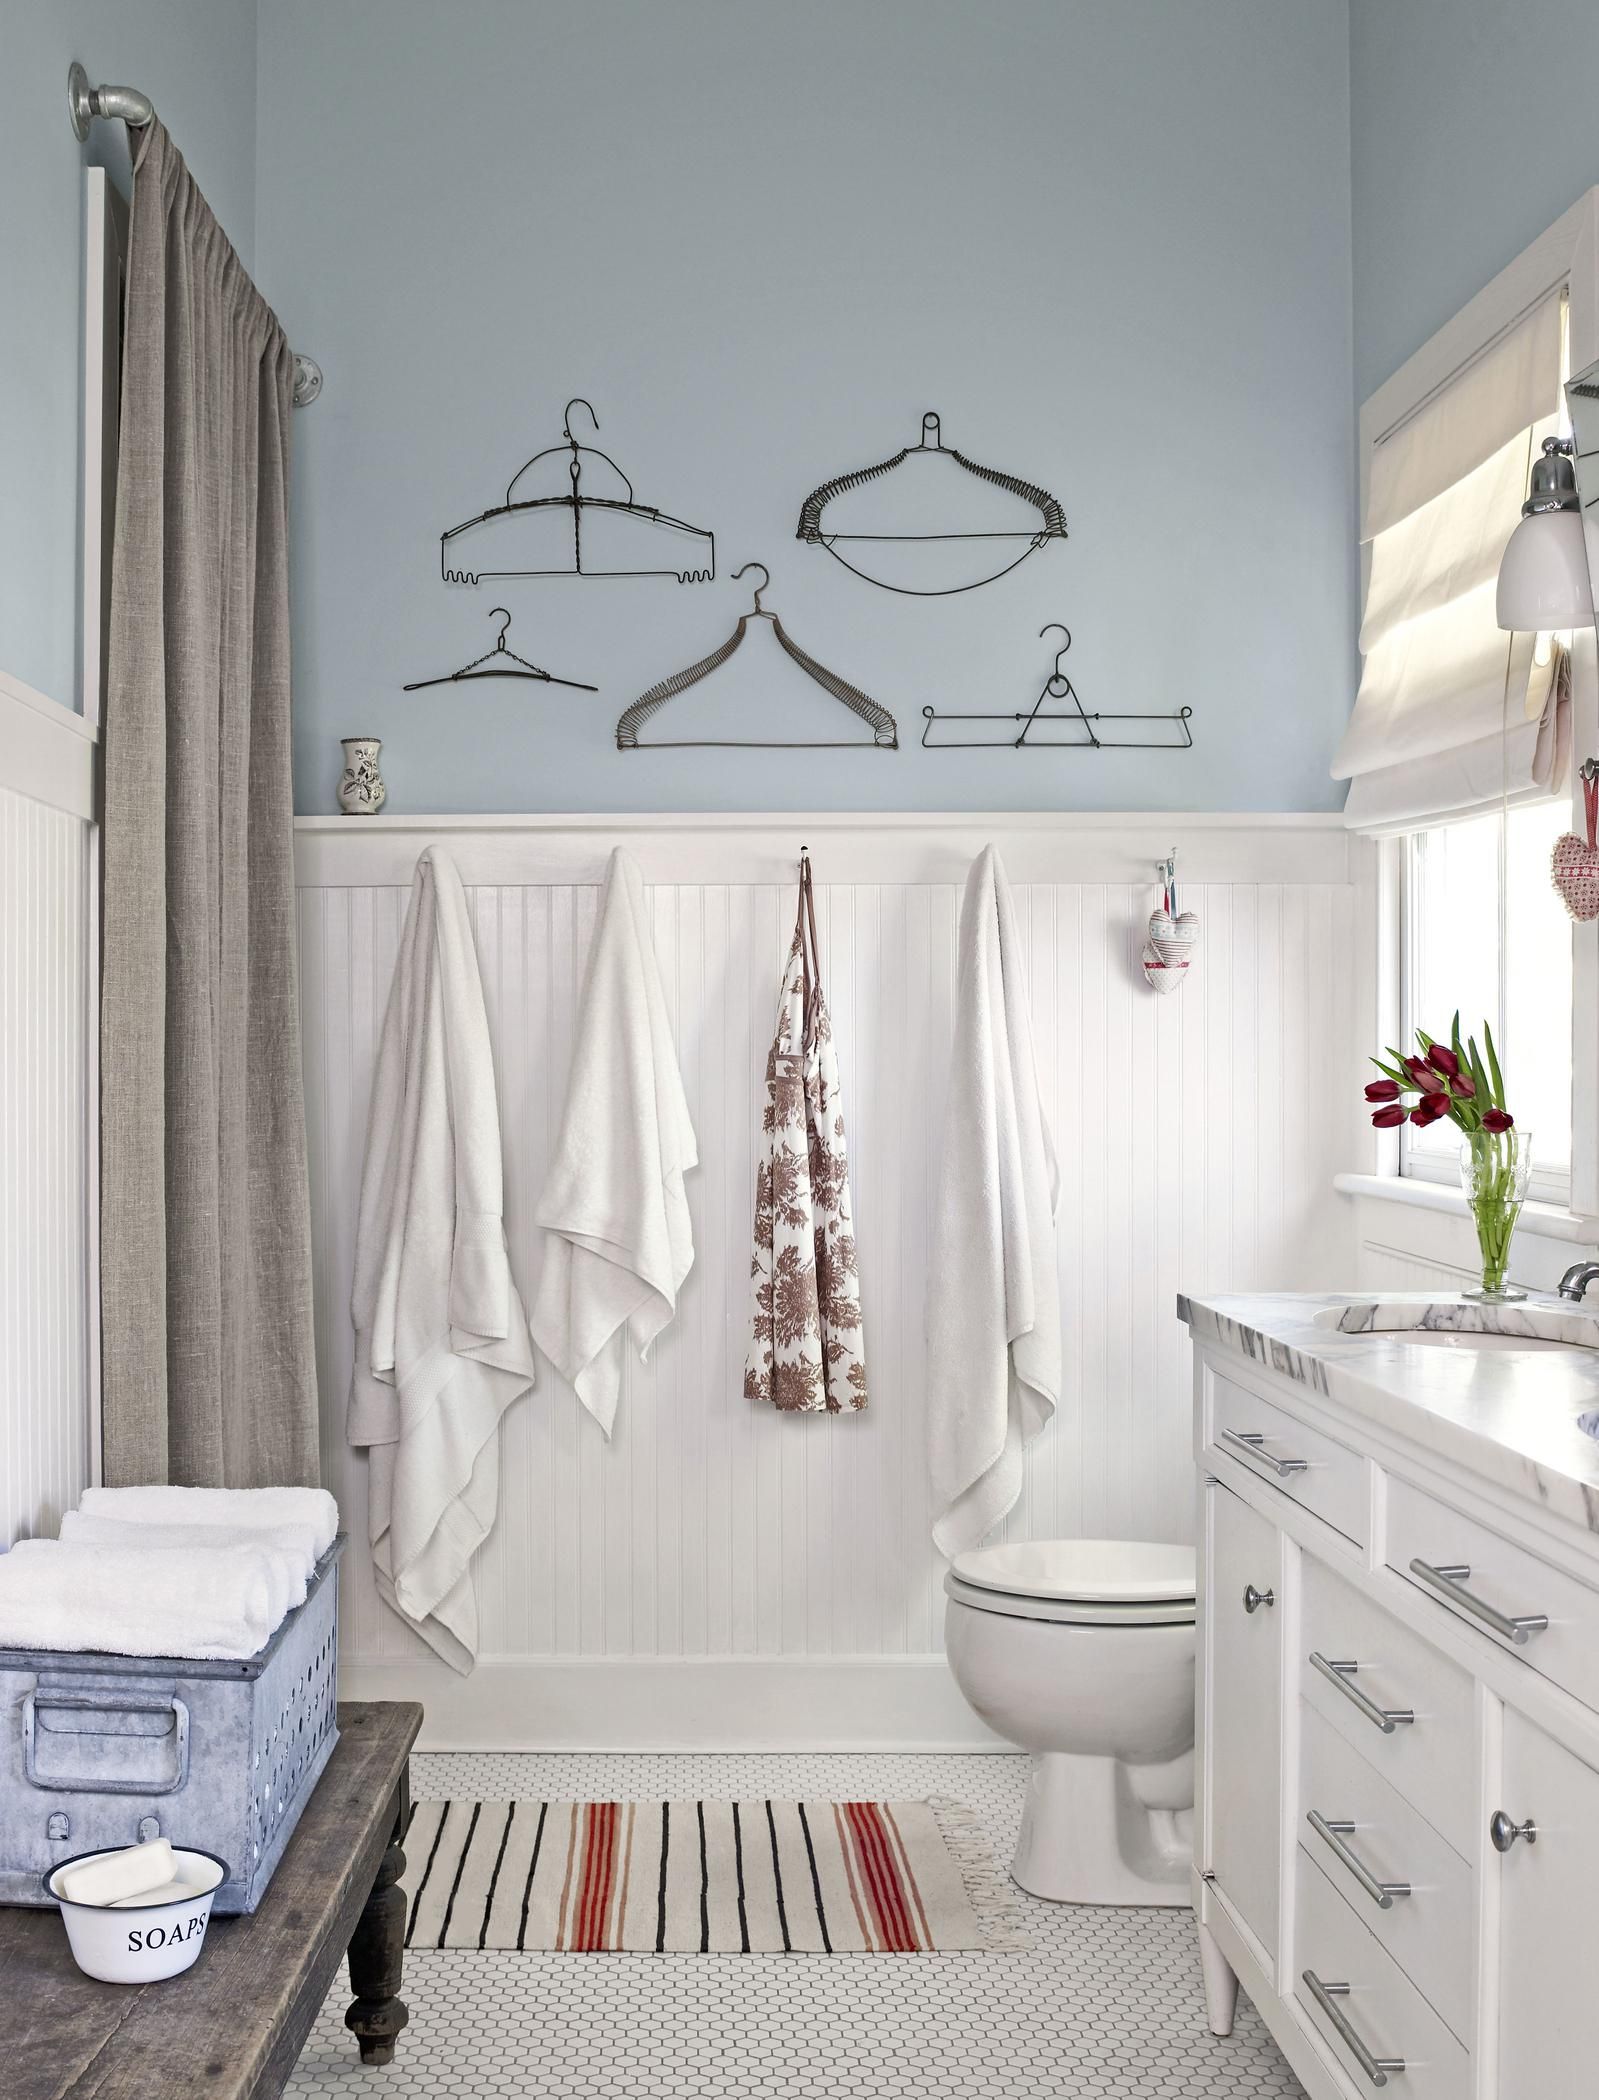 47 Rustic Bathroom Decor Ideas, Small Country Bathroom Ideas